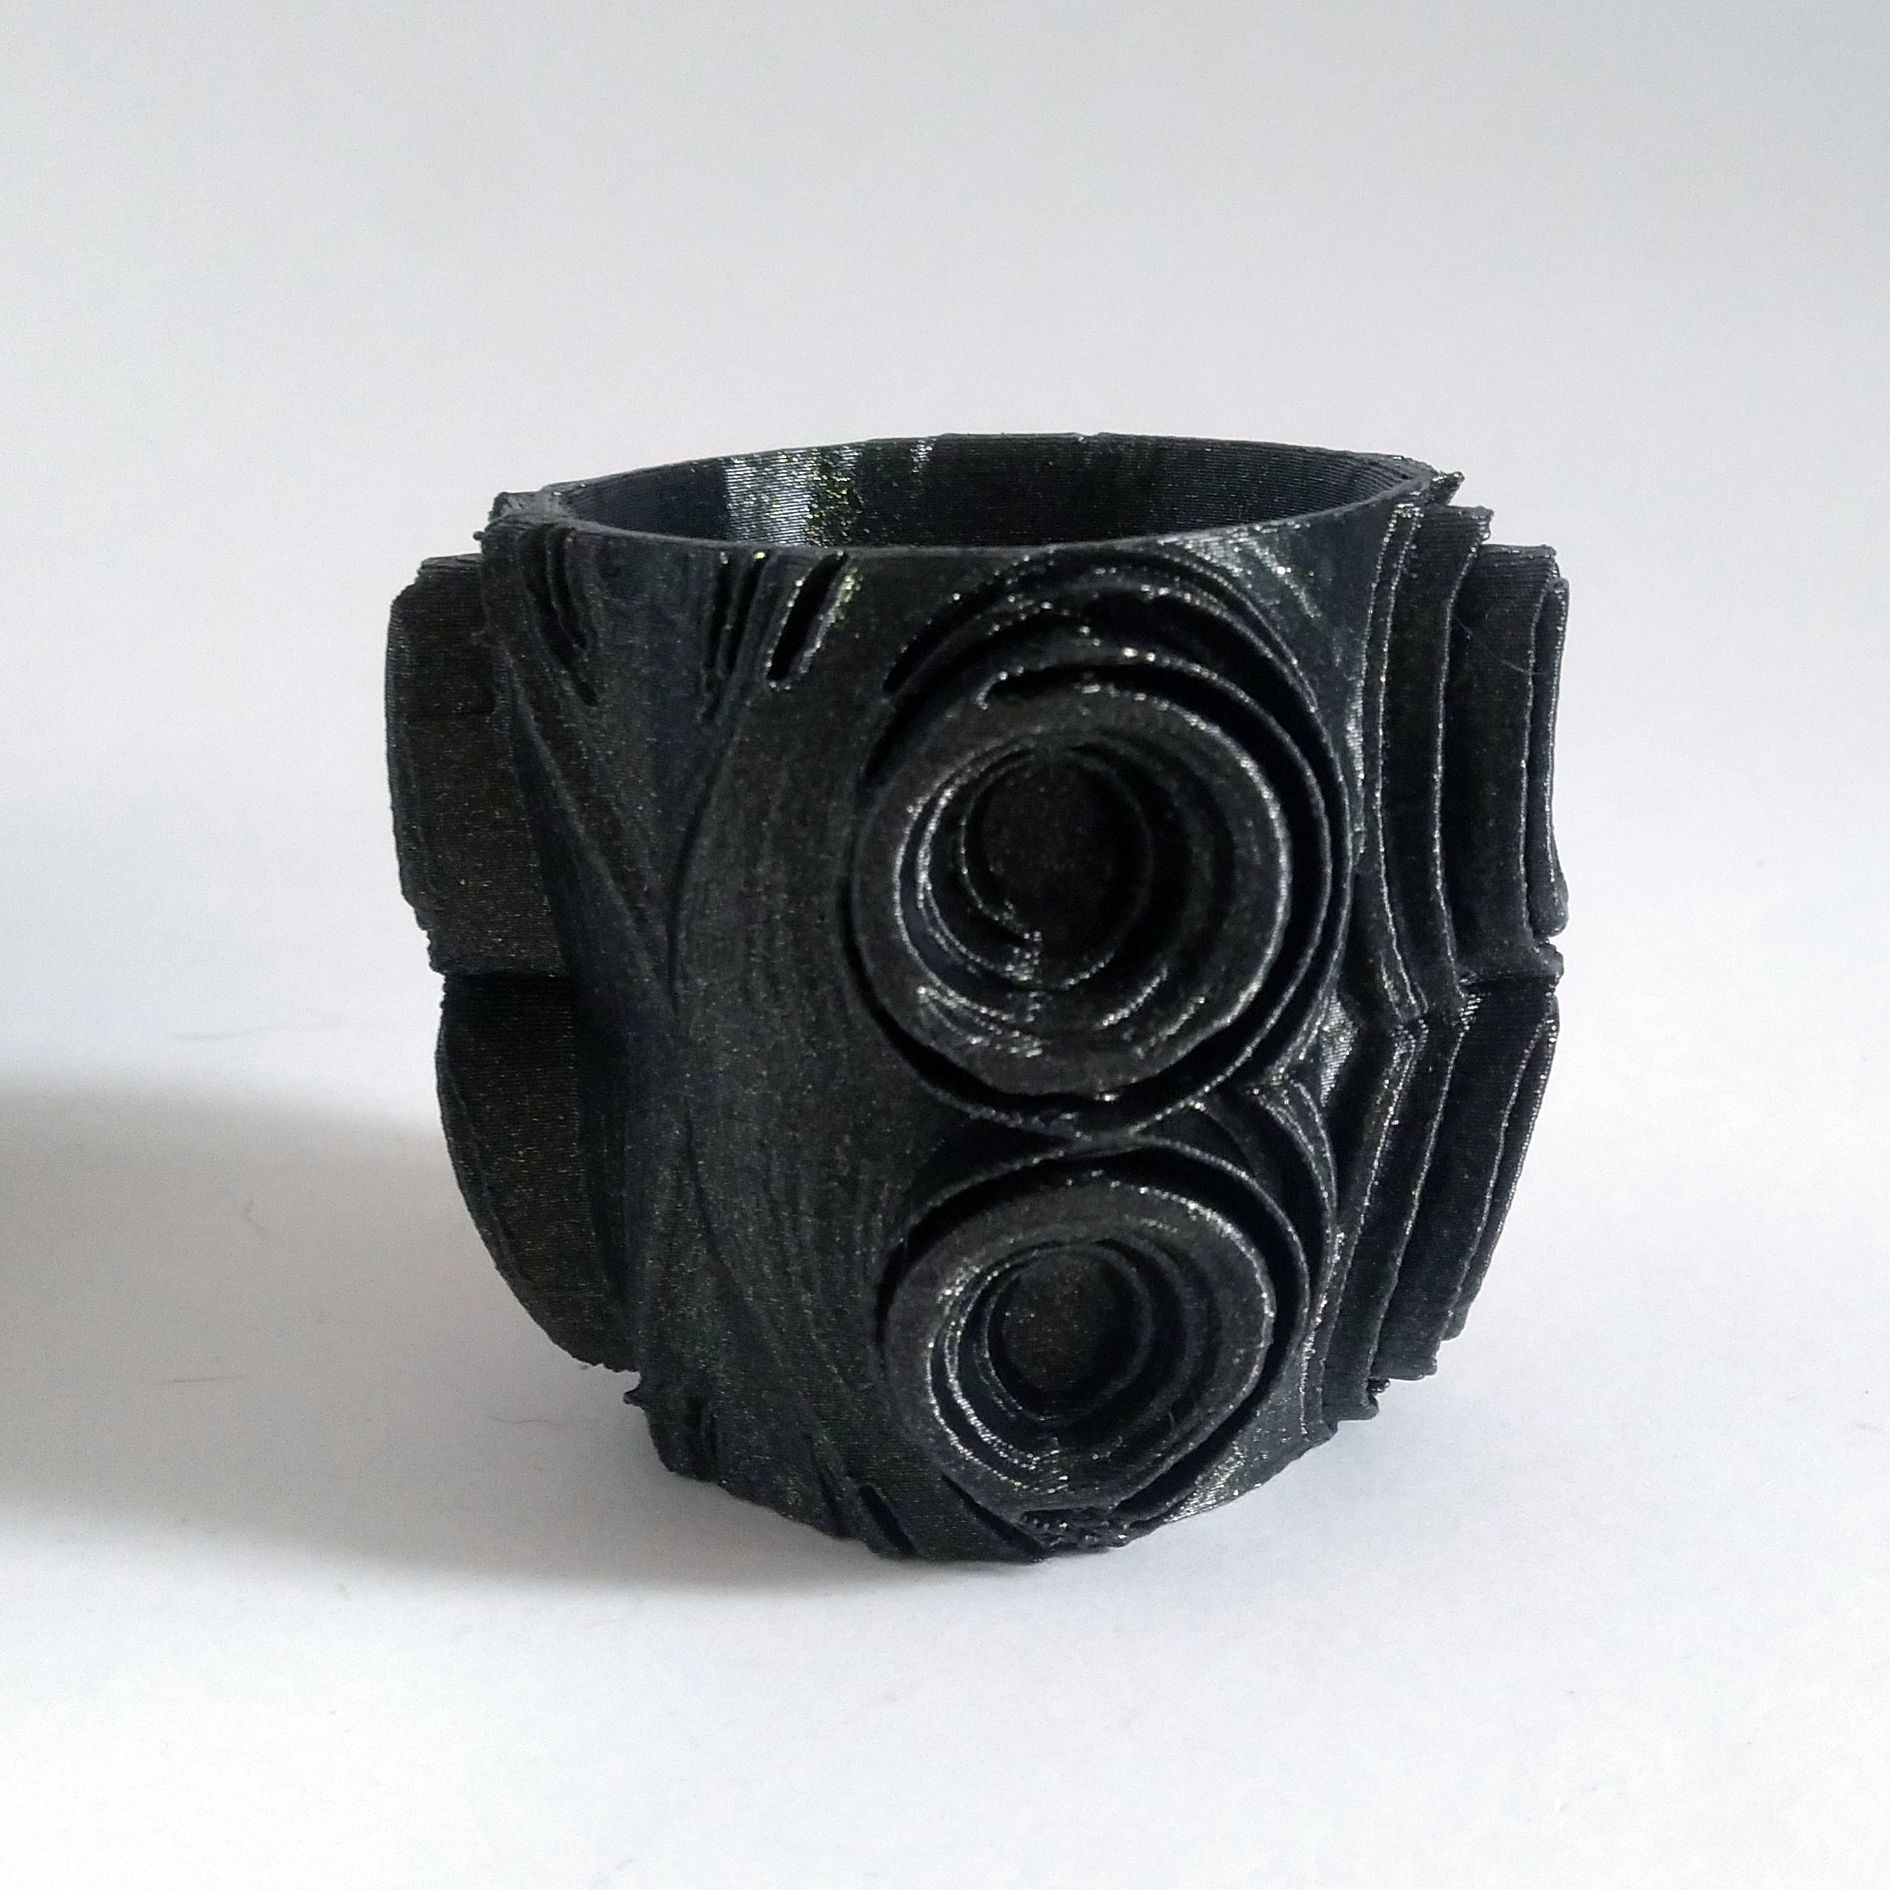 IMG_20190914_121802.jpg Download STL file Alien Pottery Collection • 3D printer object, ferjerez3d